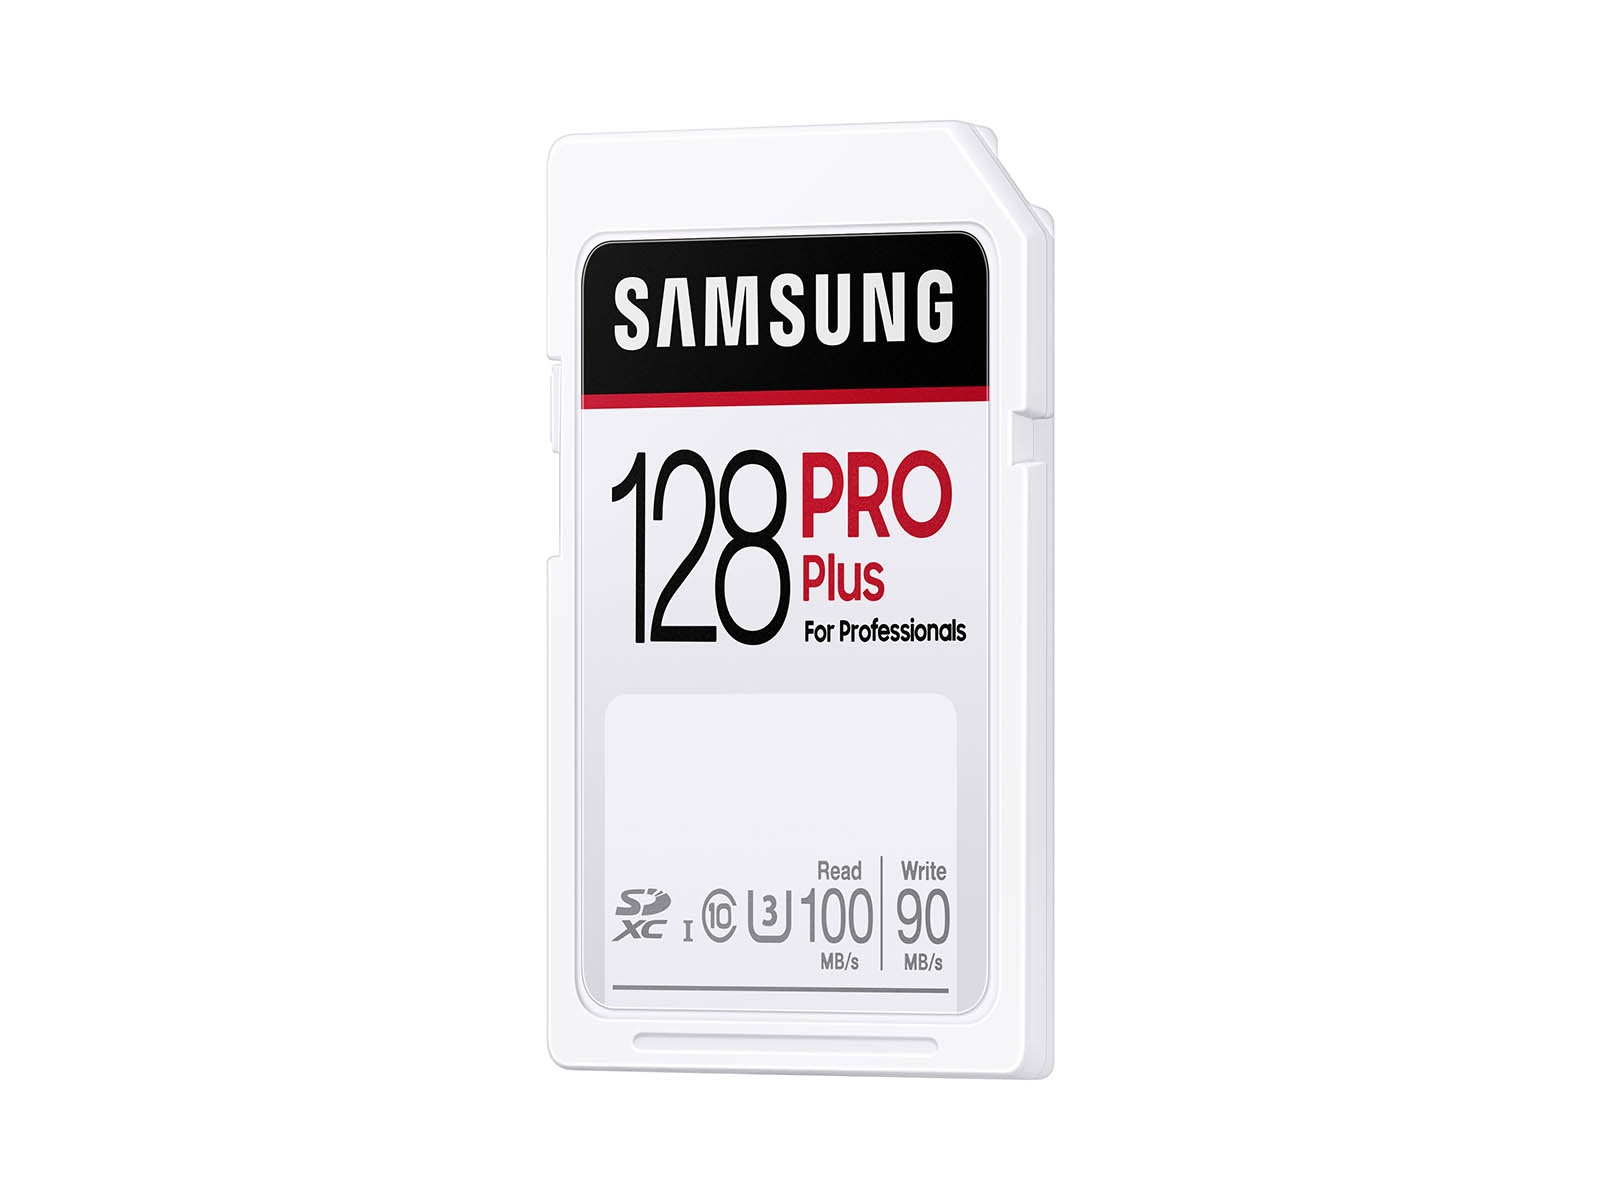 Thumbnail image of PRO Plus SDXC Full-size SD Card 128GB